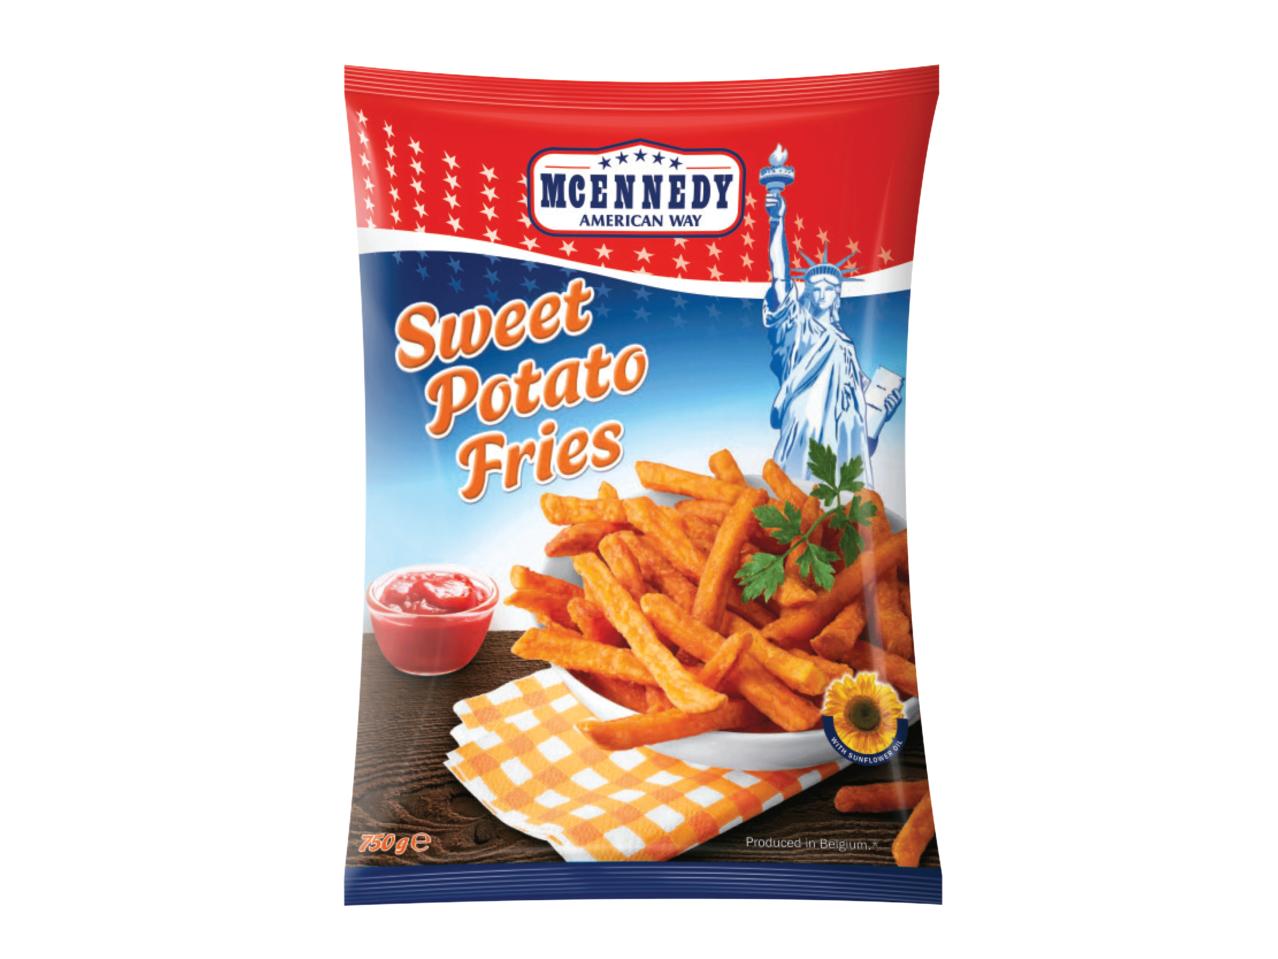 MCENNEDY Sweet Potato Fries